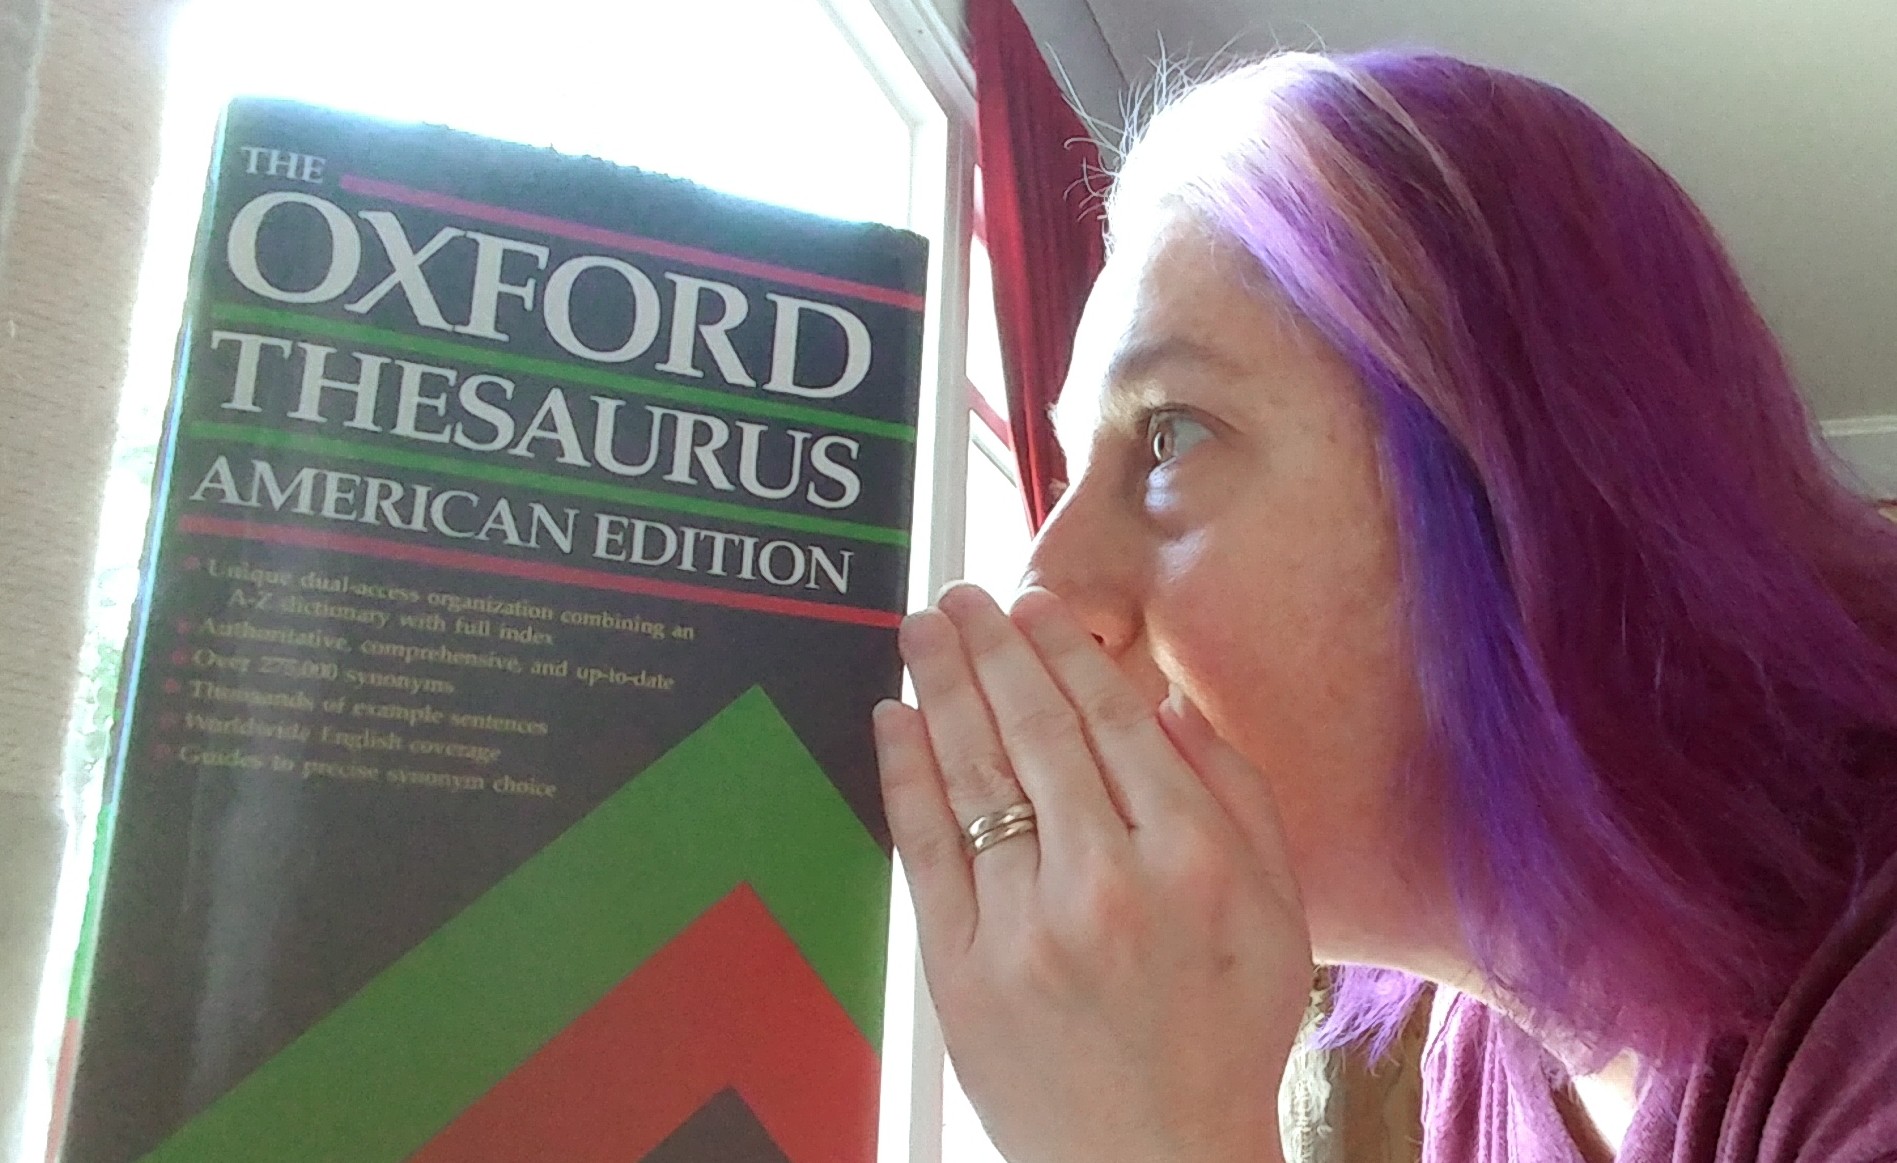 Dori Salzman whispering into a thesaurus